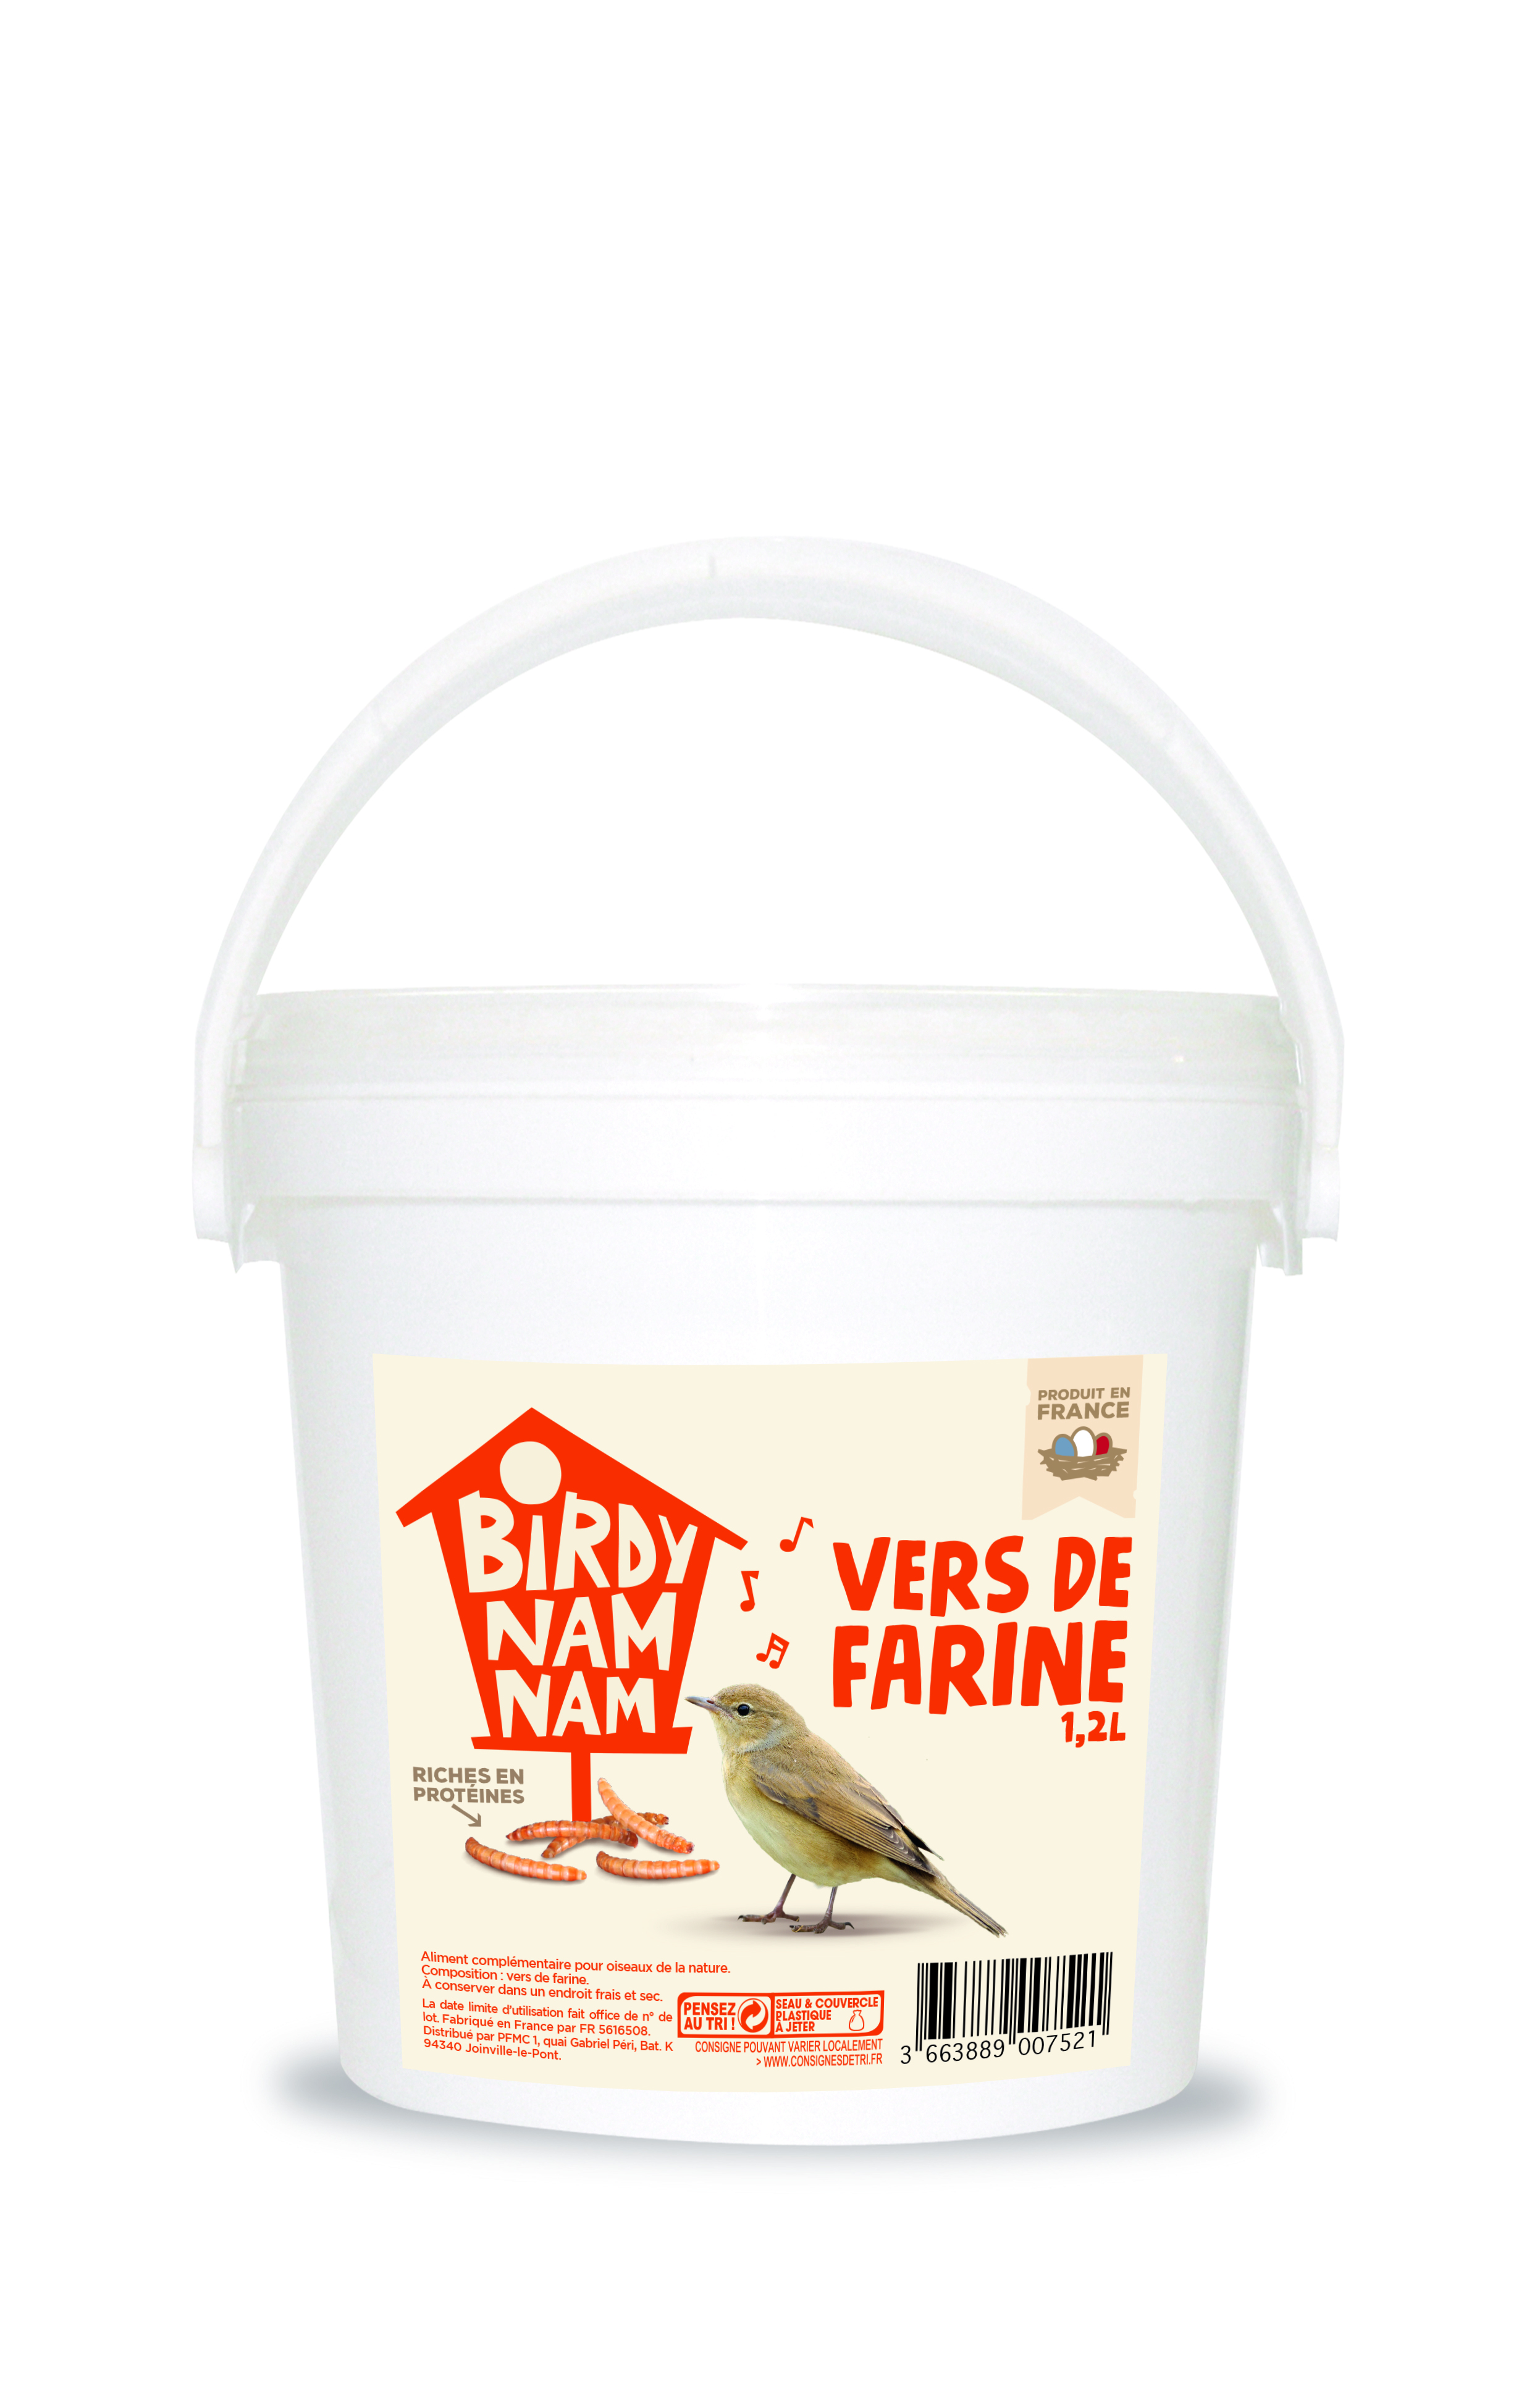 Birdy Nam Nam - Vers de farine 1.20 L. - Jardiland